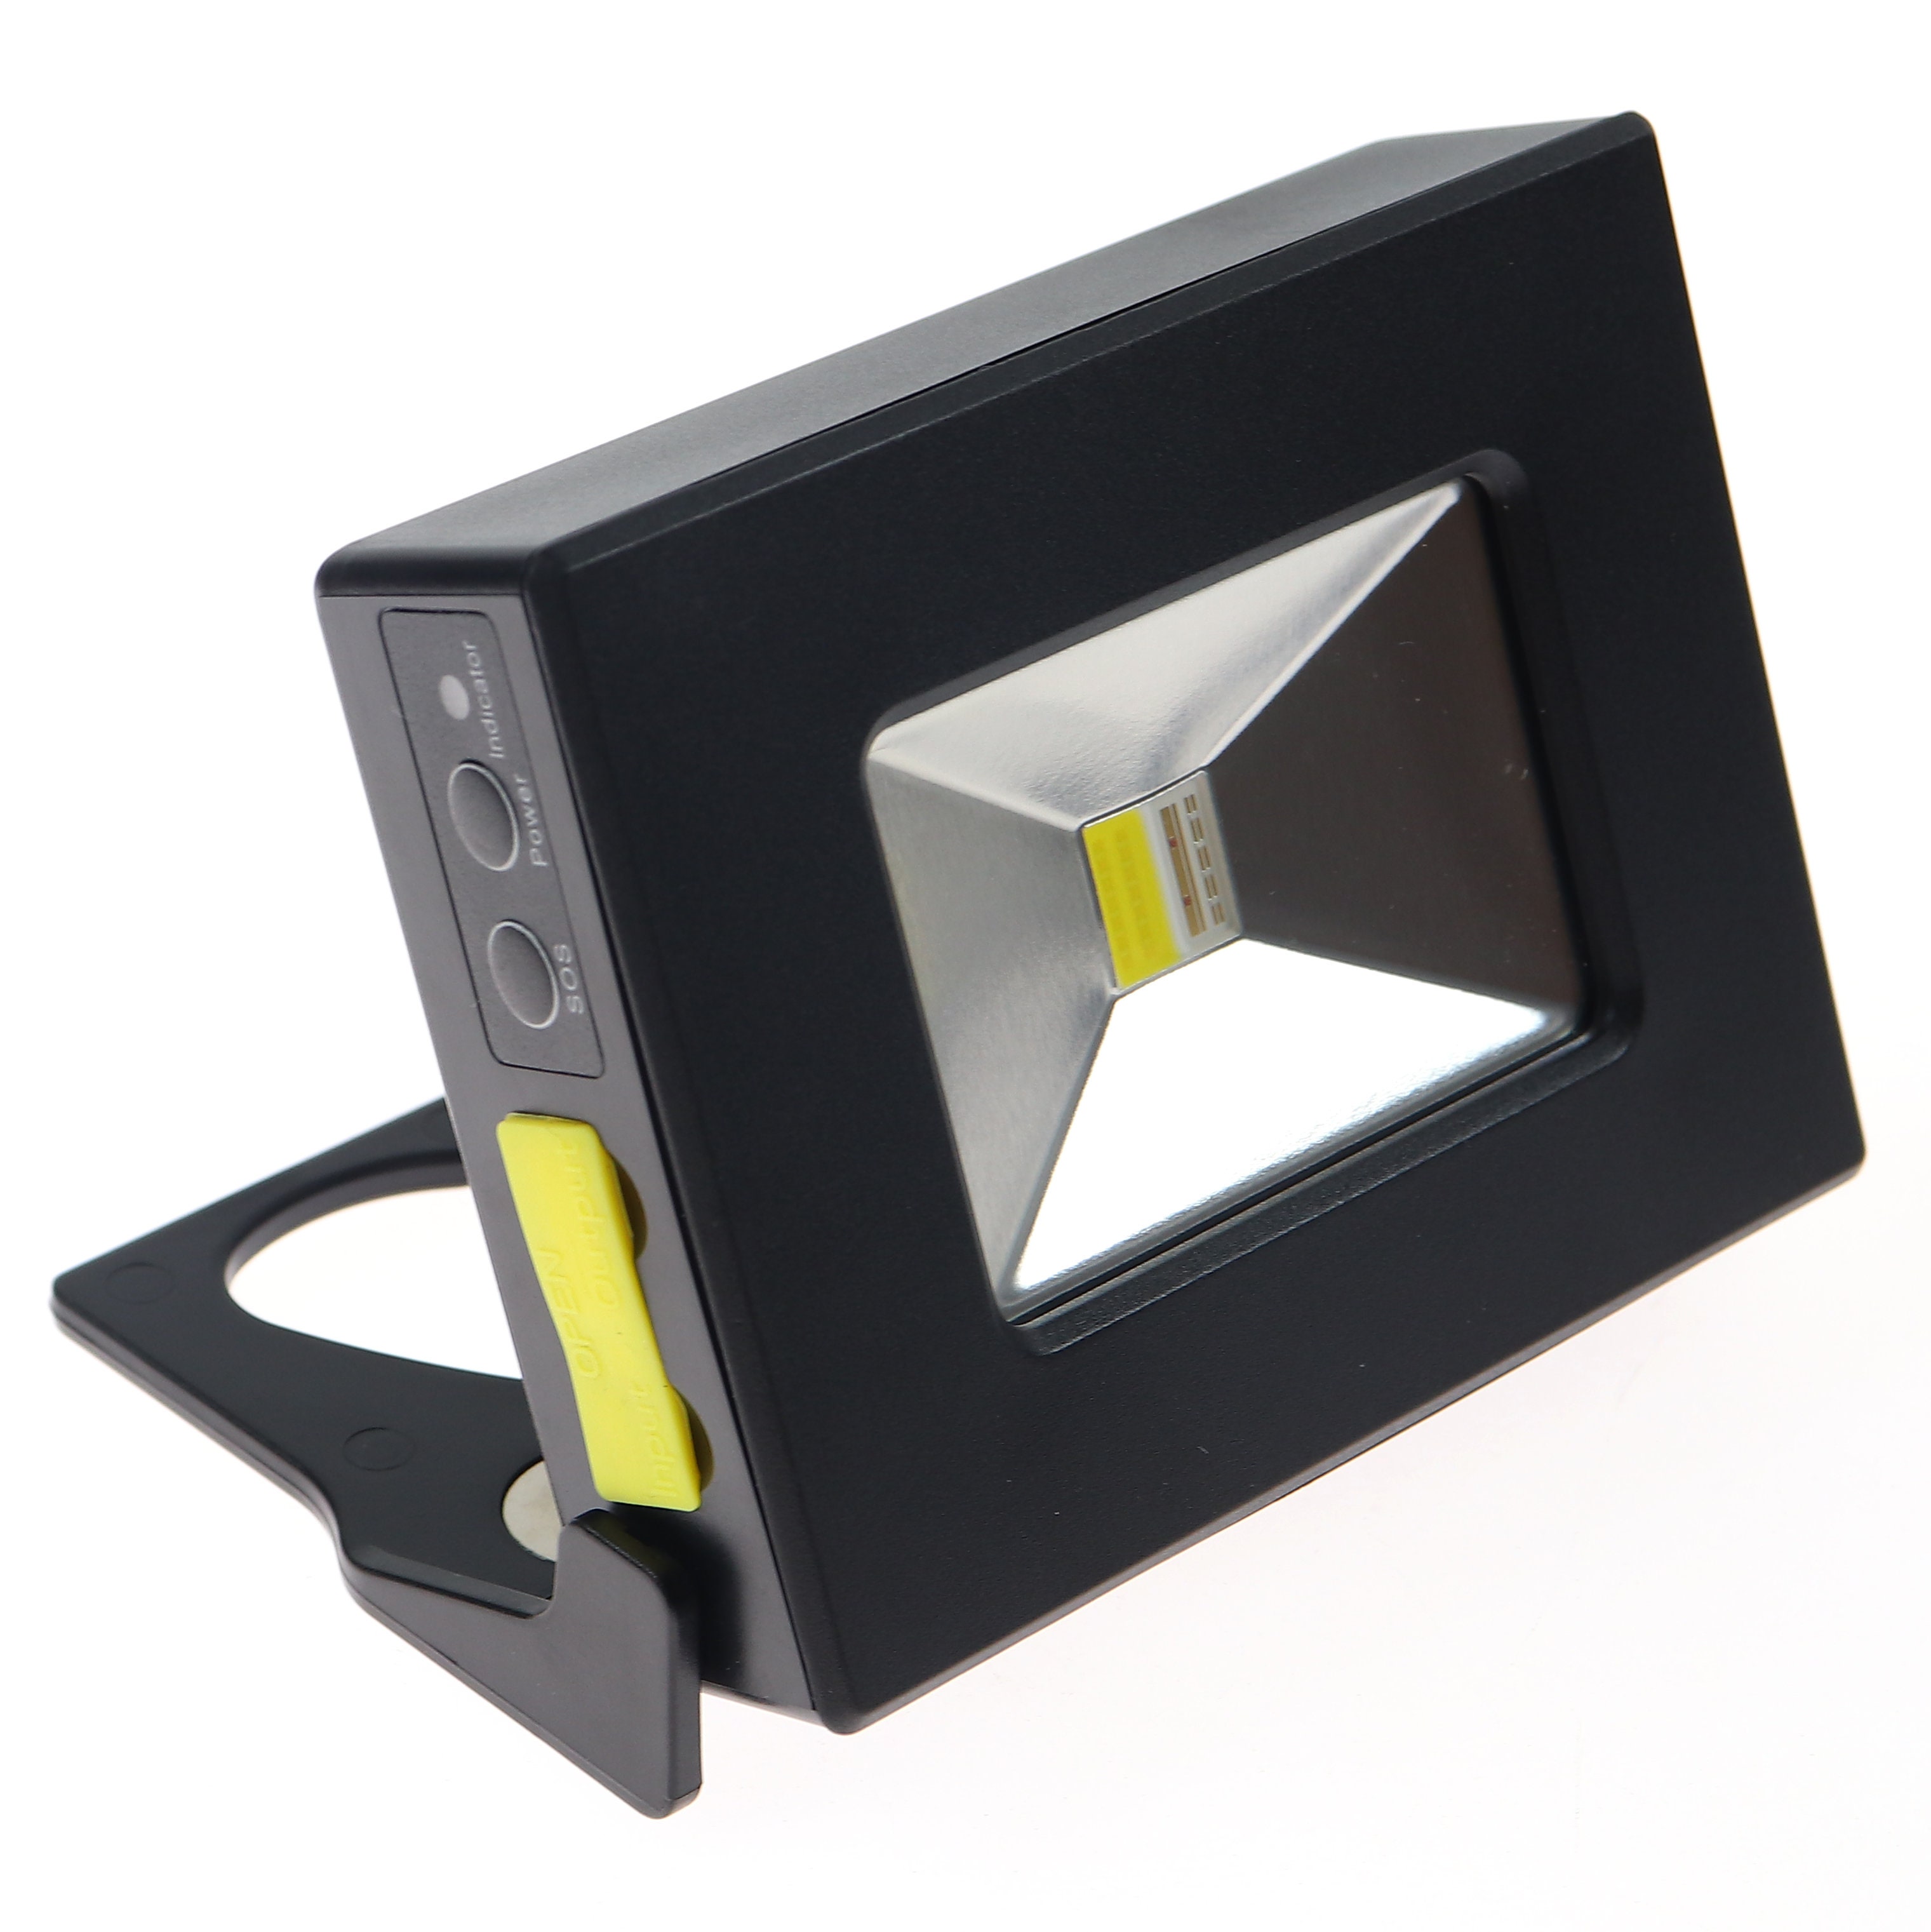 Proiector mini Hoff, 450lm, lumina rece / lumina de alarma rosie + albastra, cu magnet, acumulator si USB